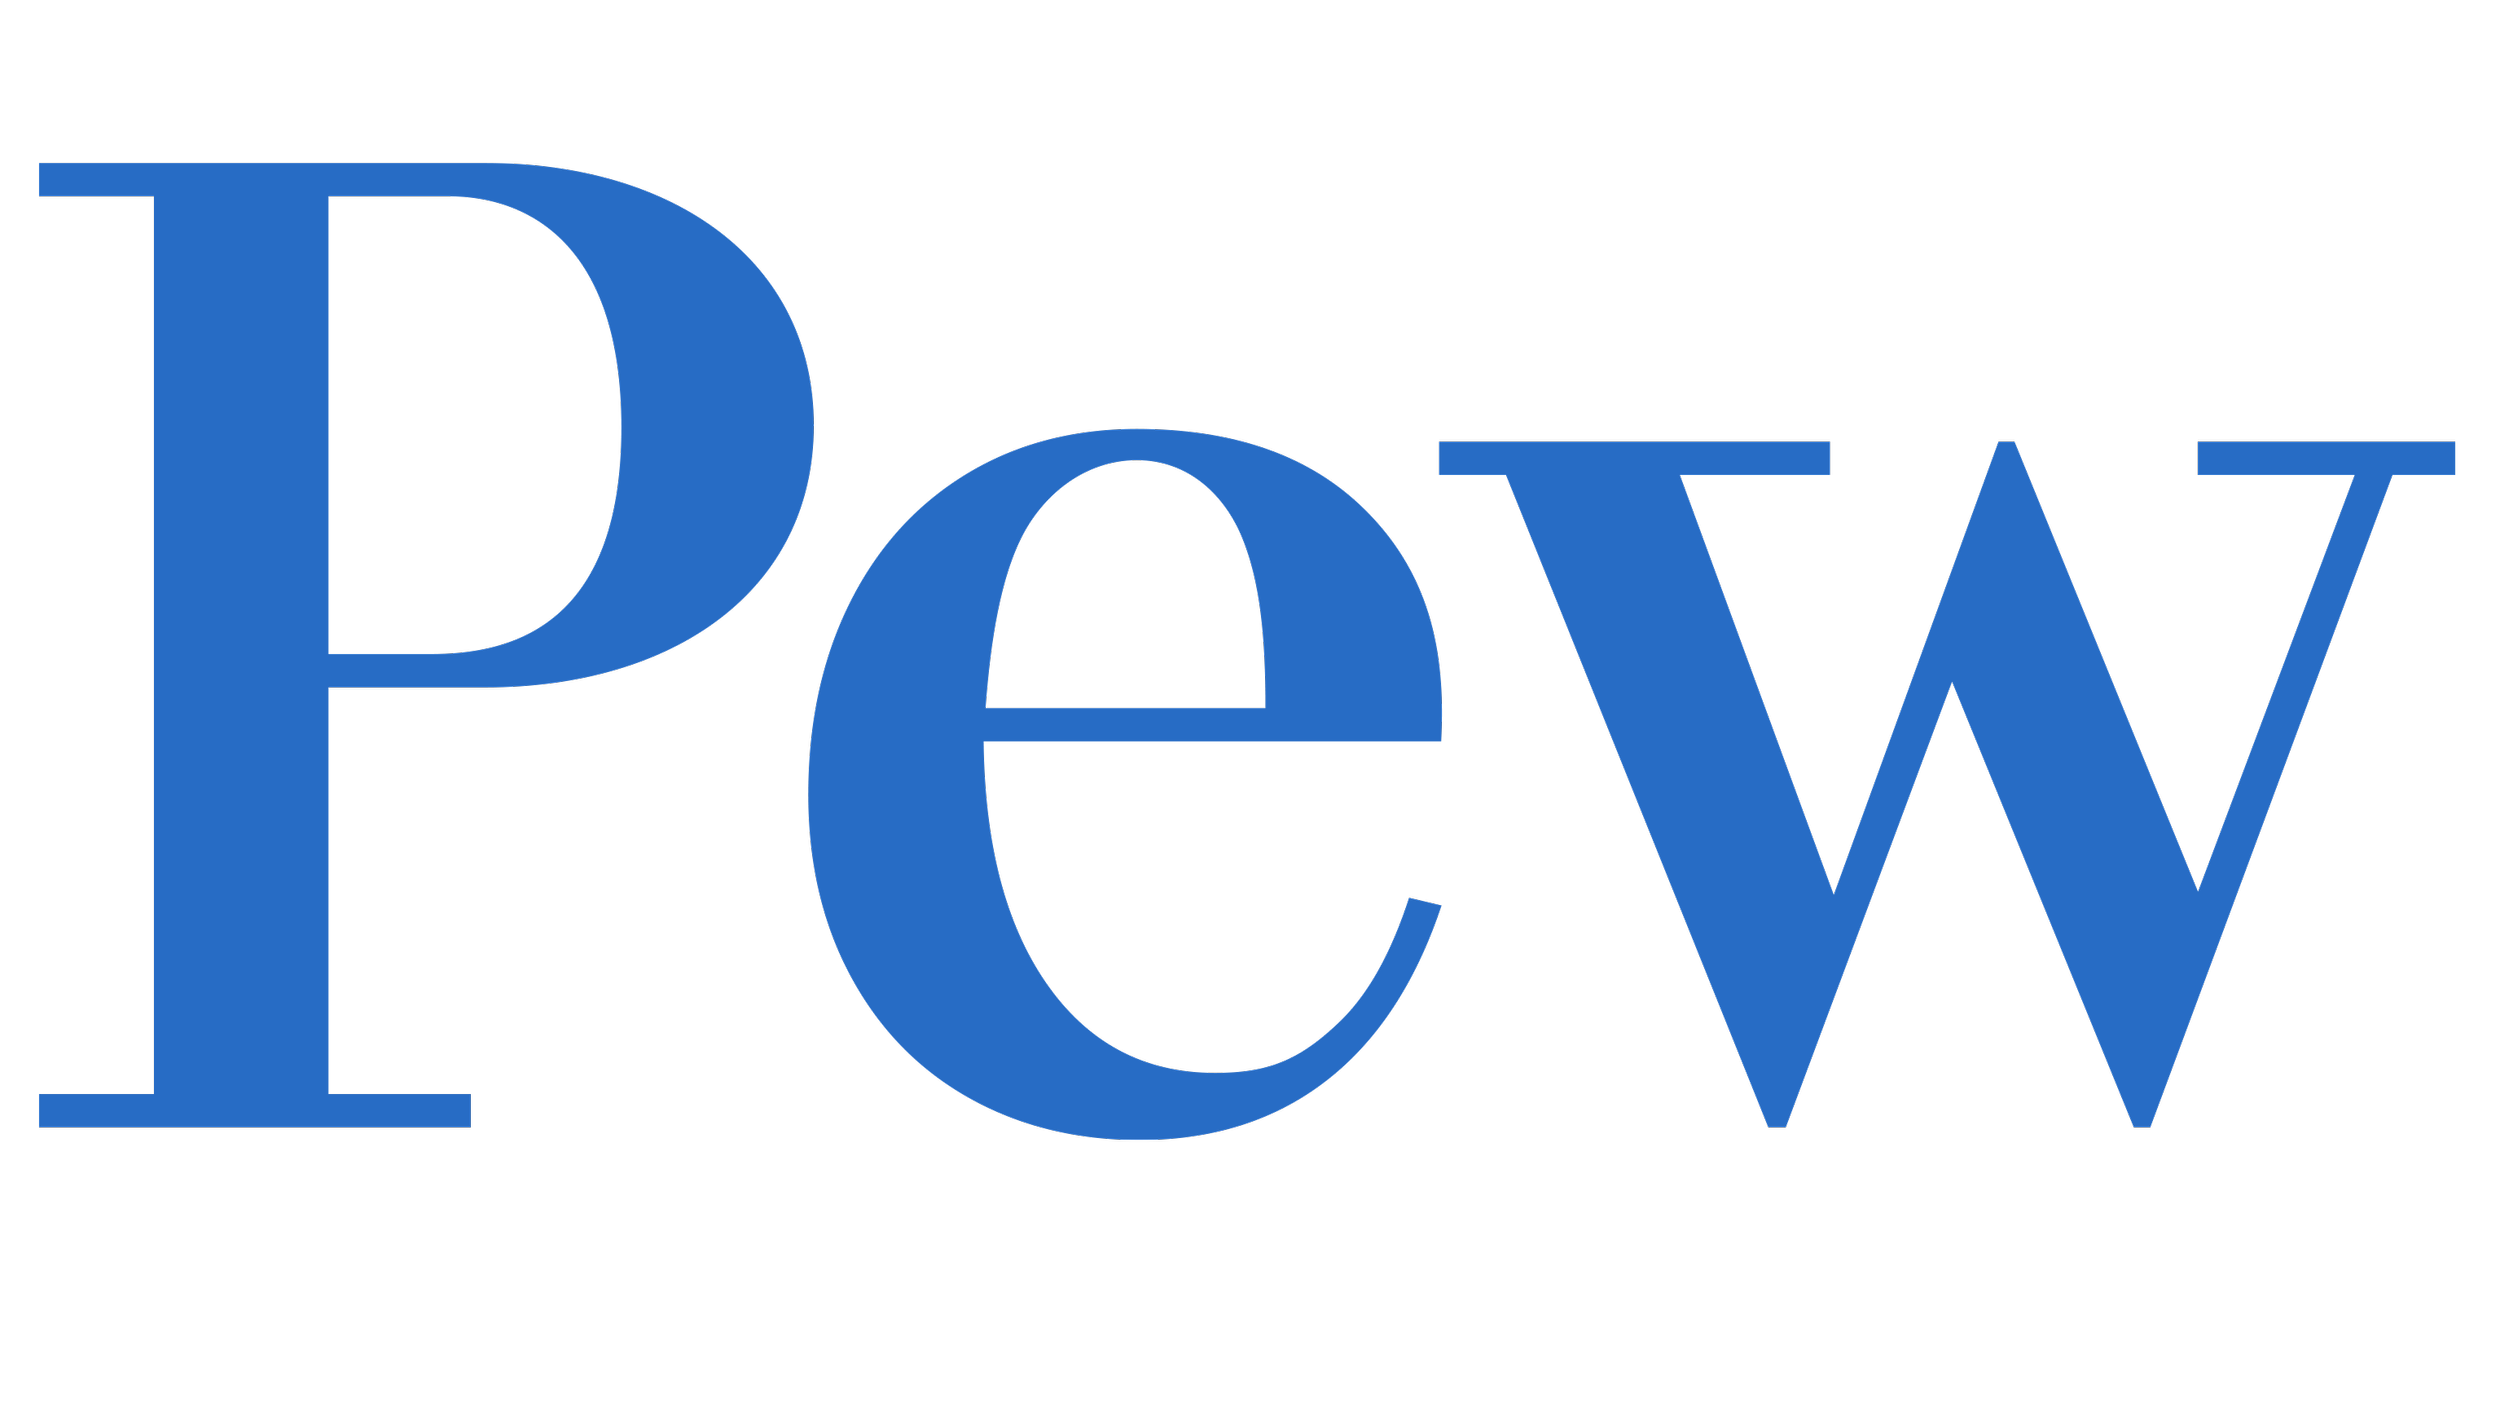 Due East Partners - Client Logo 3x2 - Pew.png